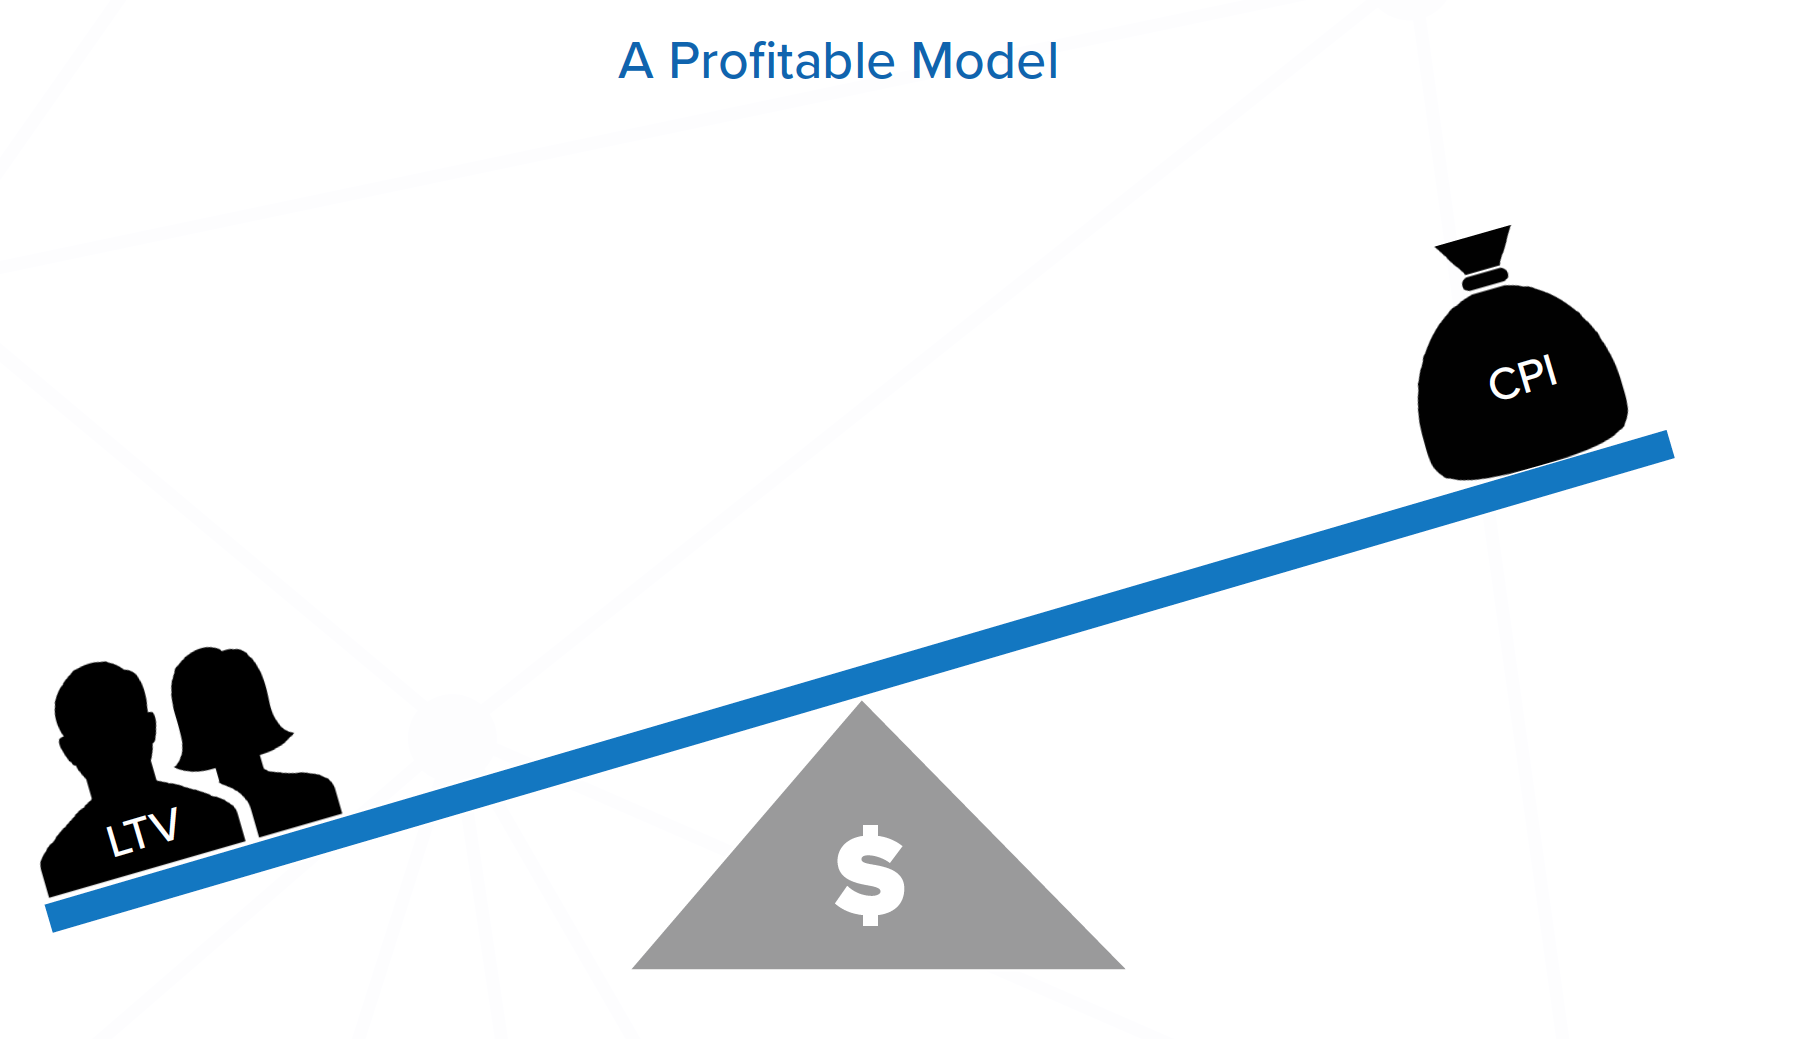 A profitable model for mobile ROI